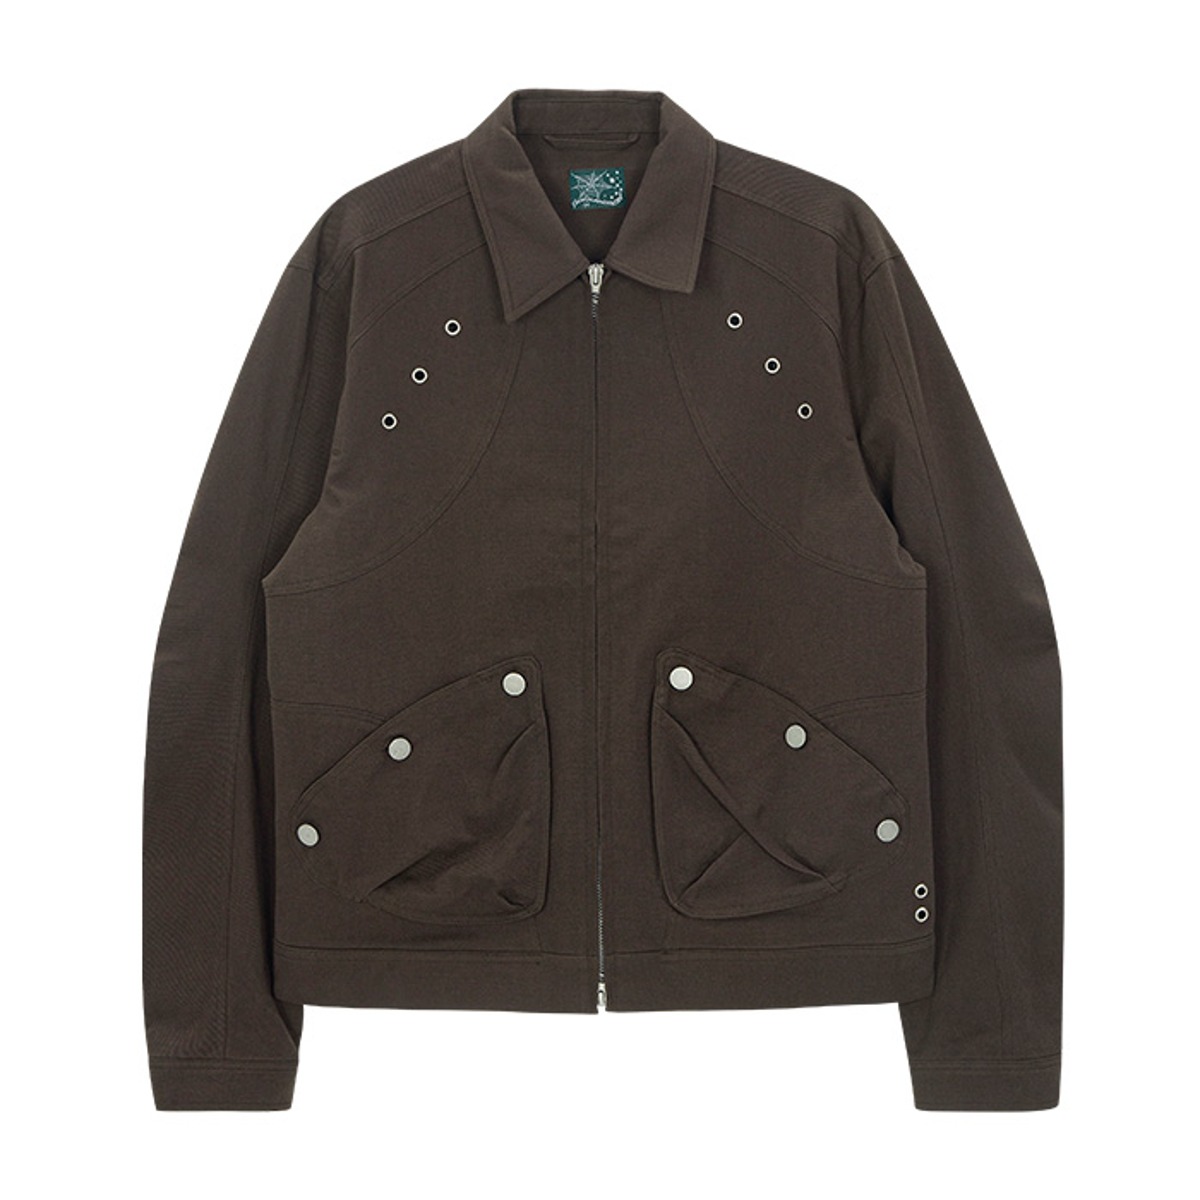 TCM trucker pocket jacket (brown) (10/31 예약배송)